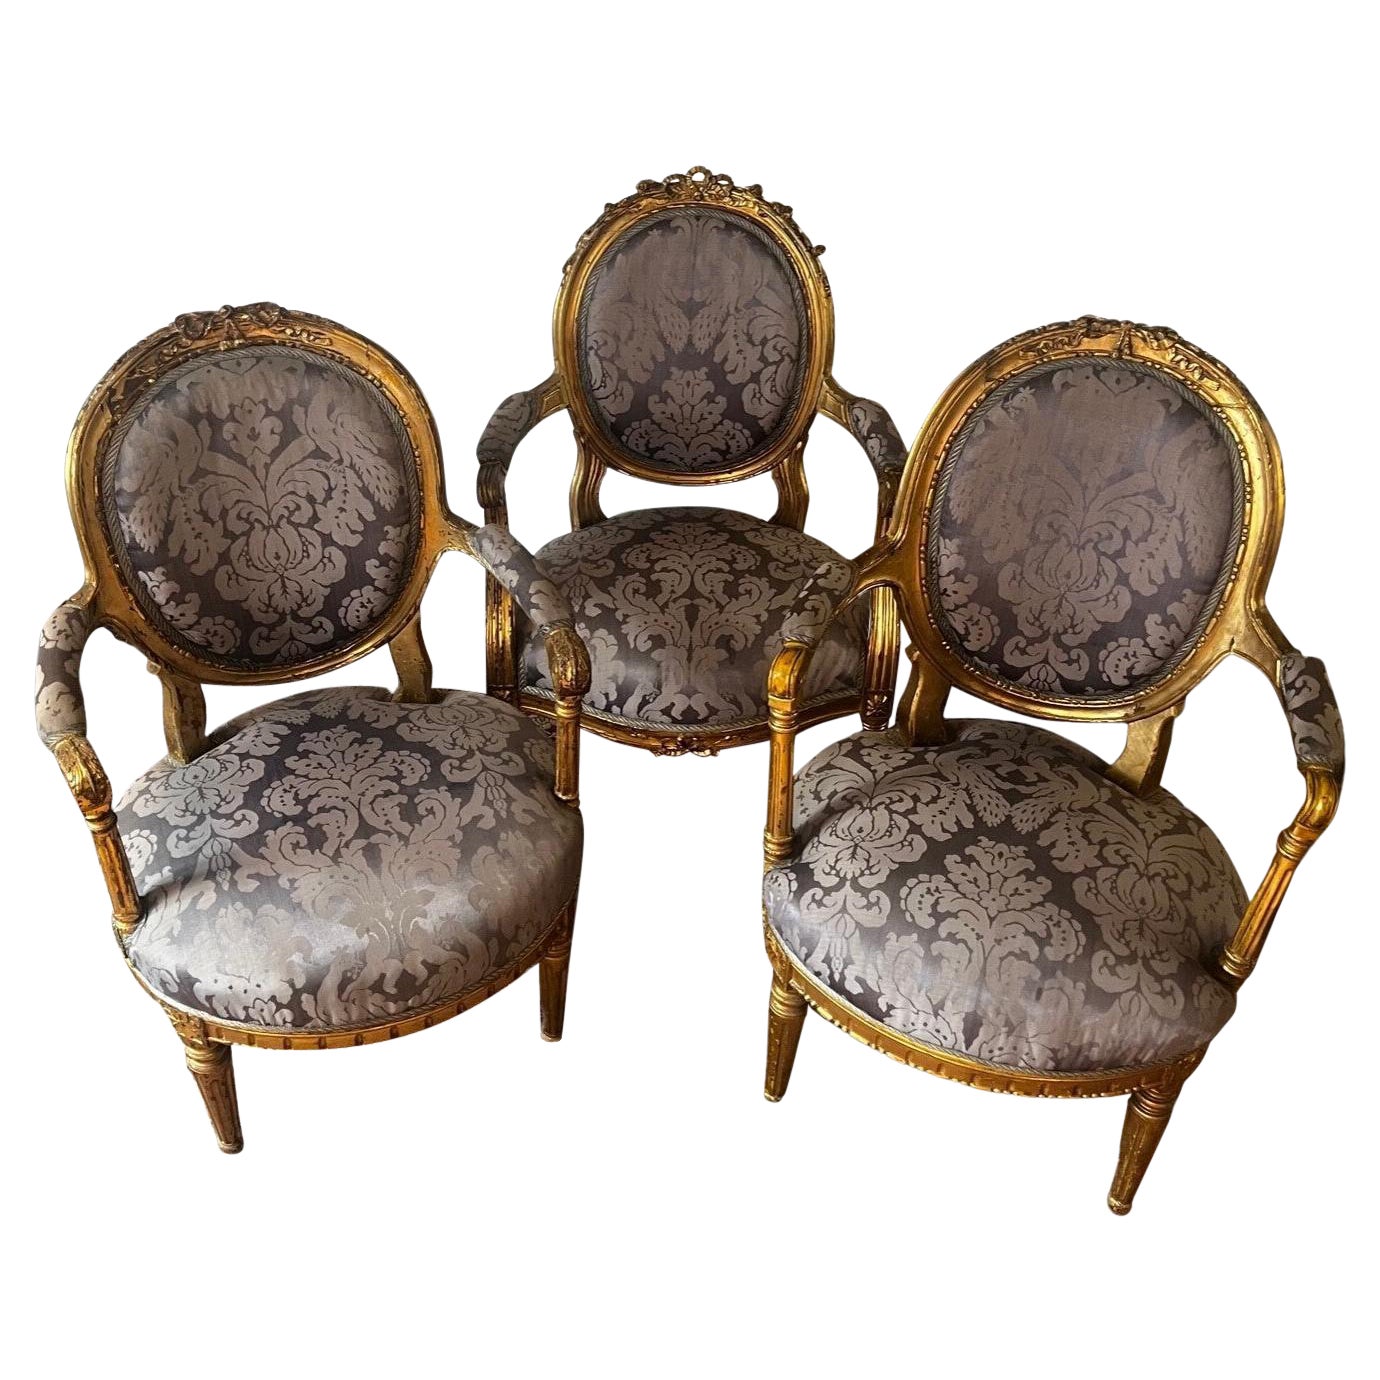 The Set of Three Original 18th Century Louis XVI Gold Gilded Armchairs